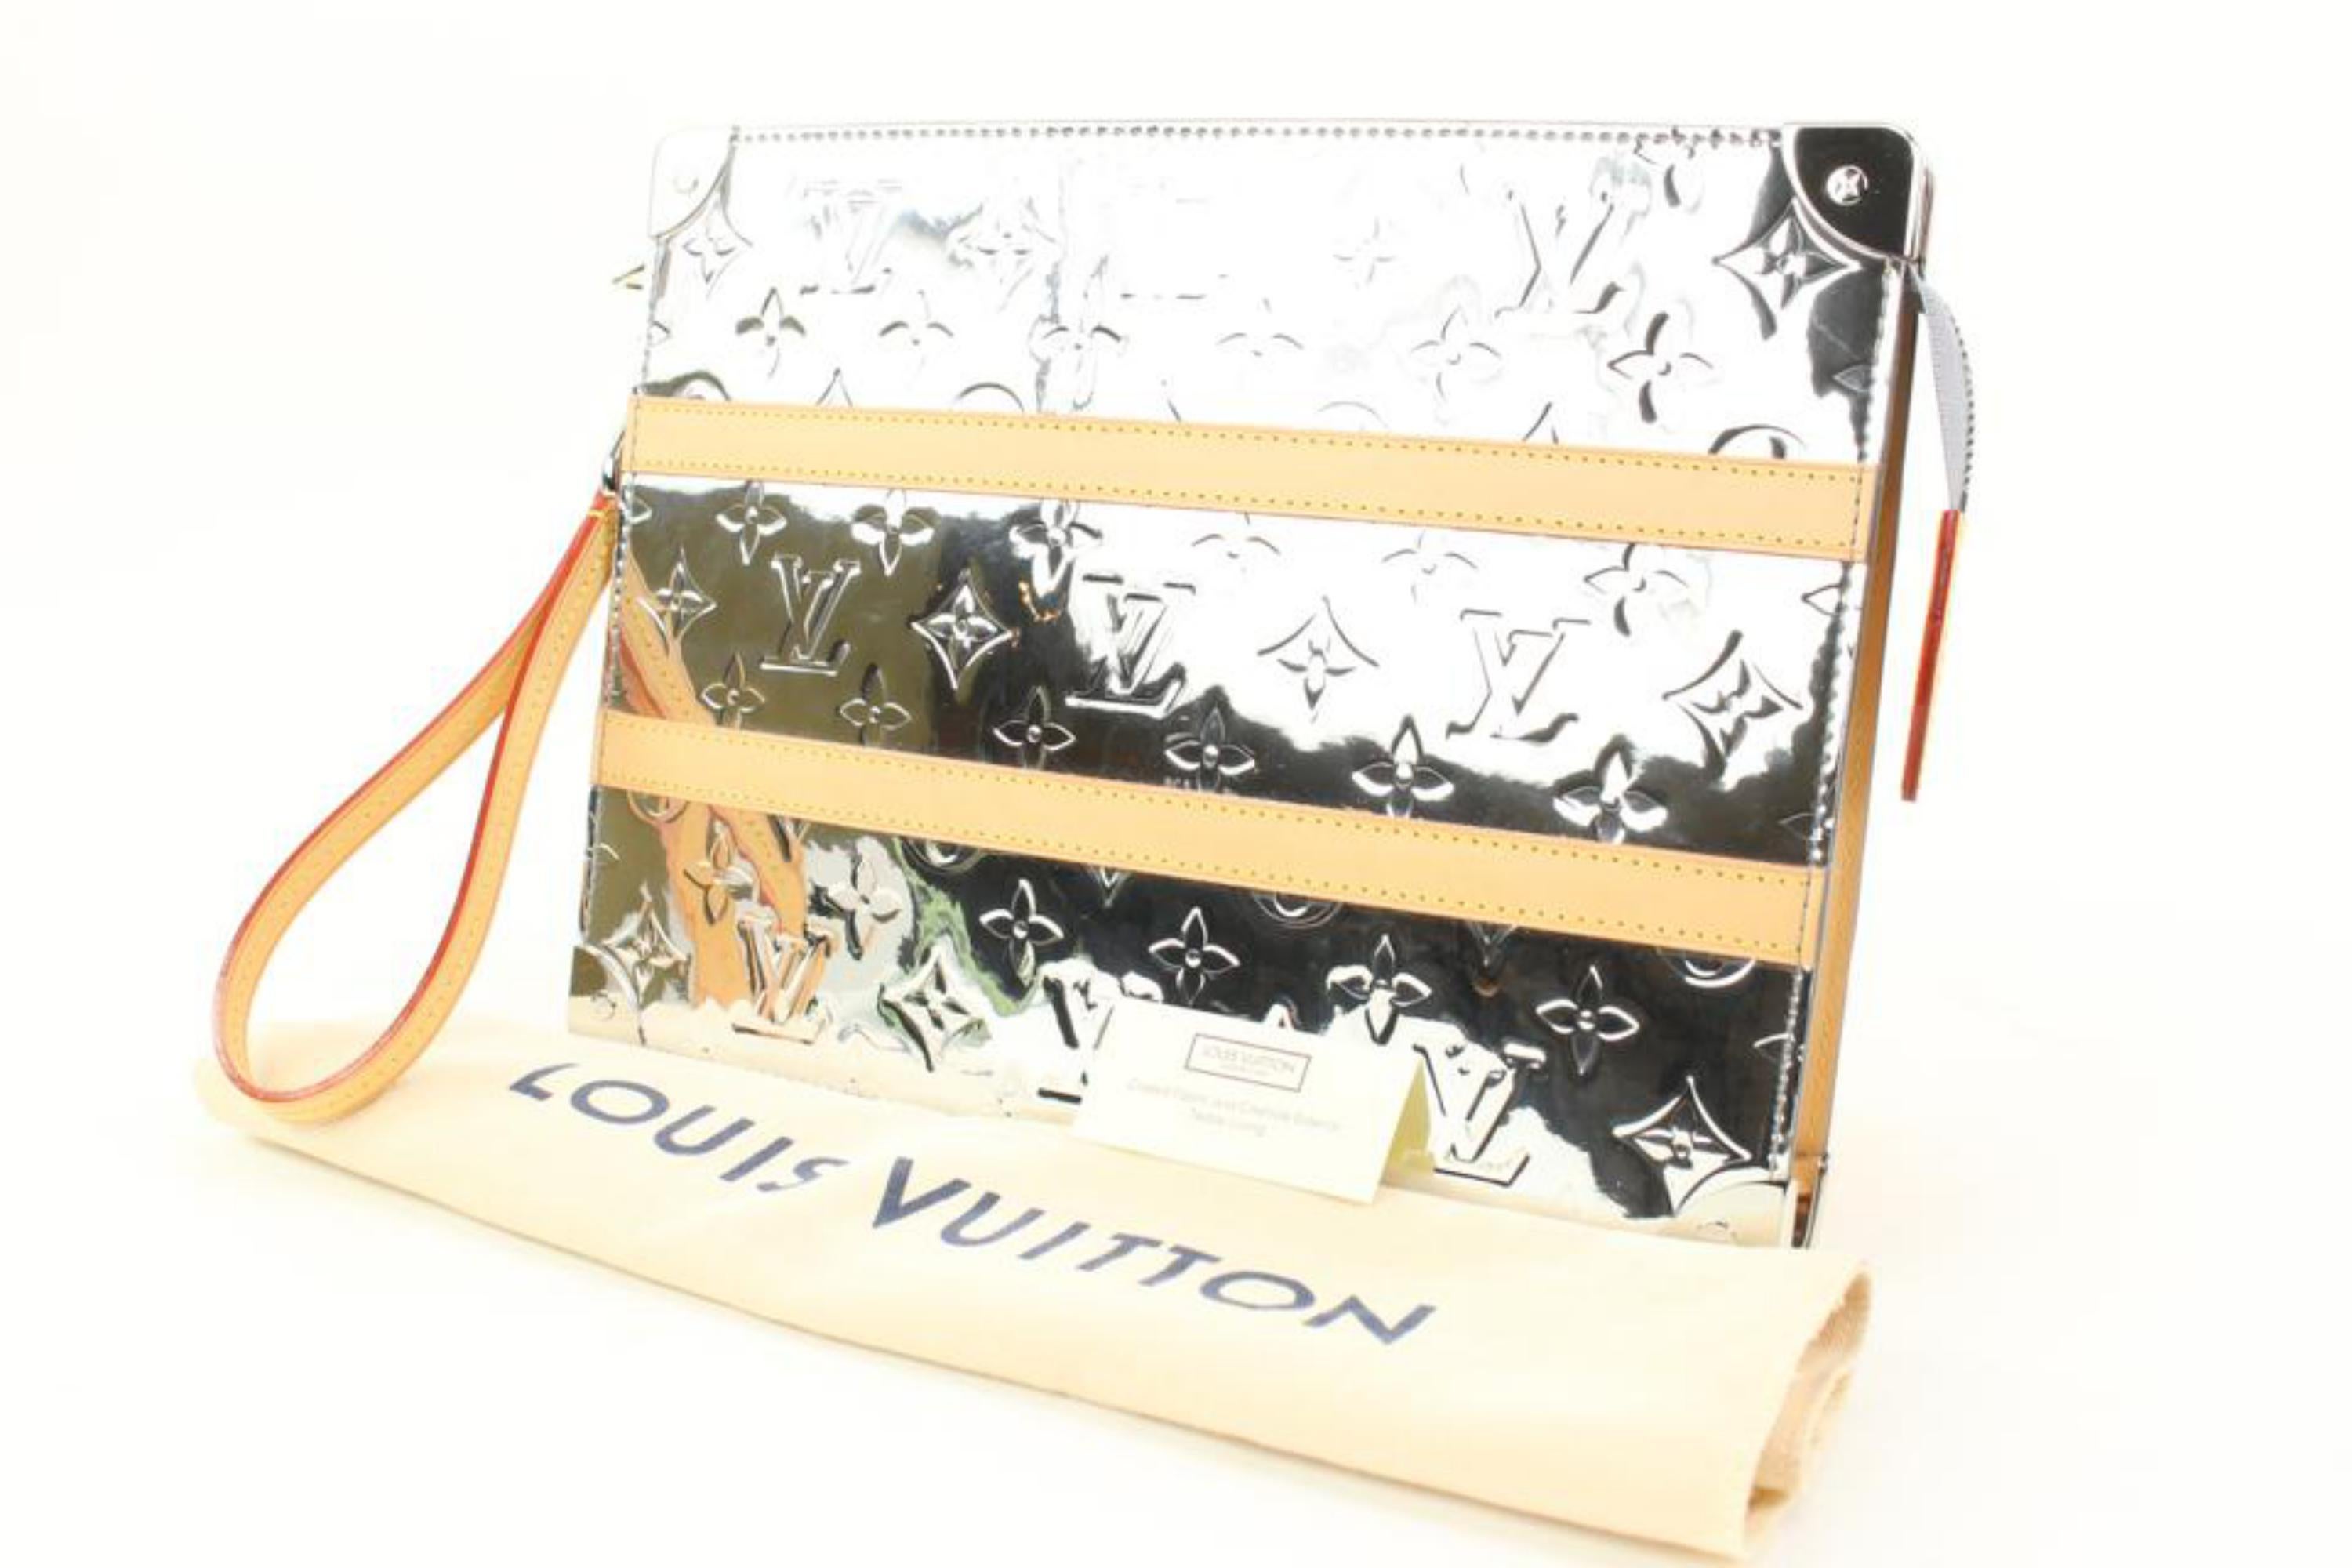 Louis Vuitton Virgil Abloh Monogram Mirror Pochette Trunk Wristlet Clutch 50lv314s
Date Code/Serial Sticker: RFID Chip
Made In: France
Measurements: Length:  11